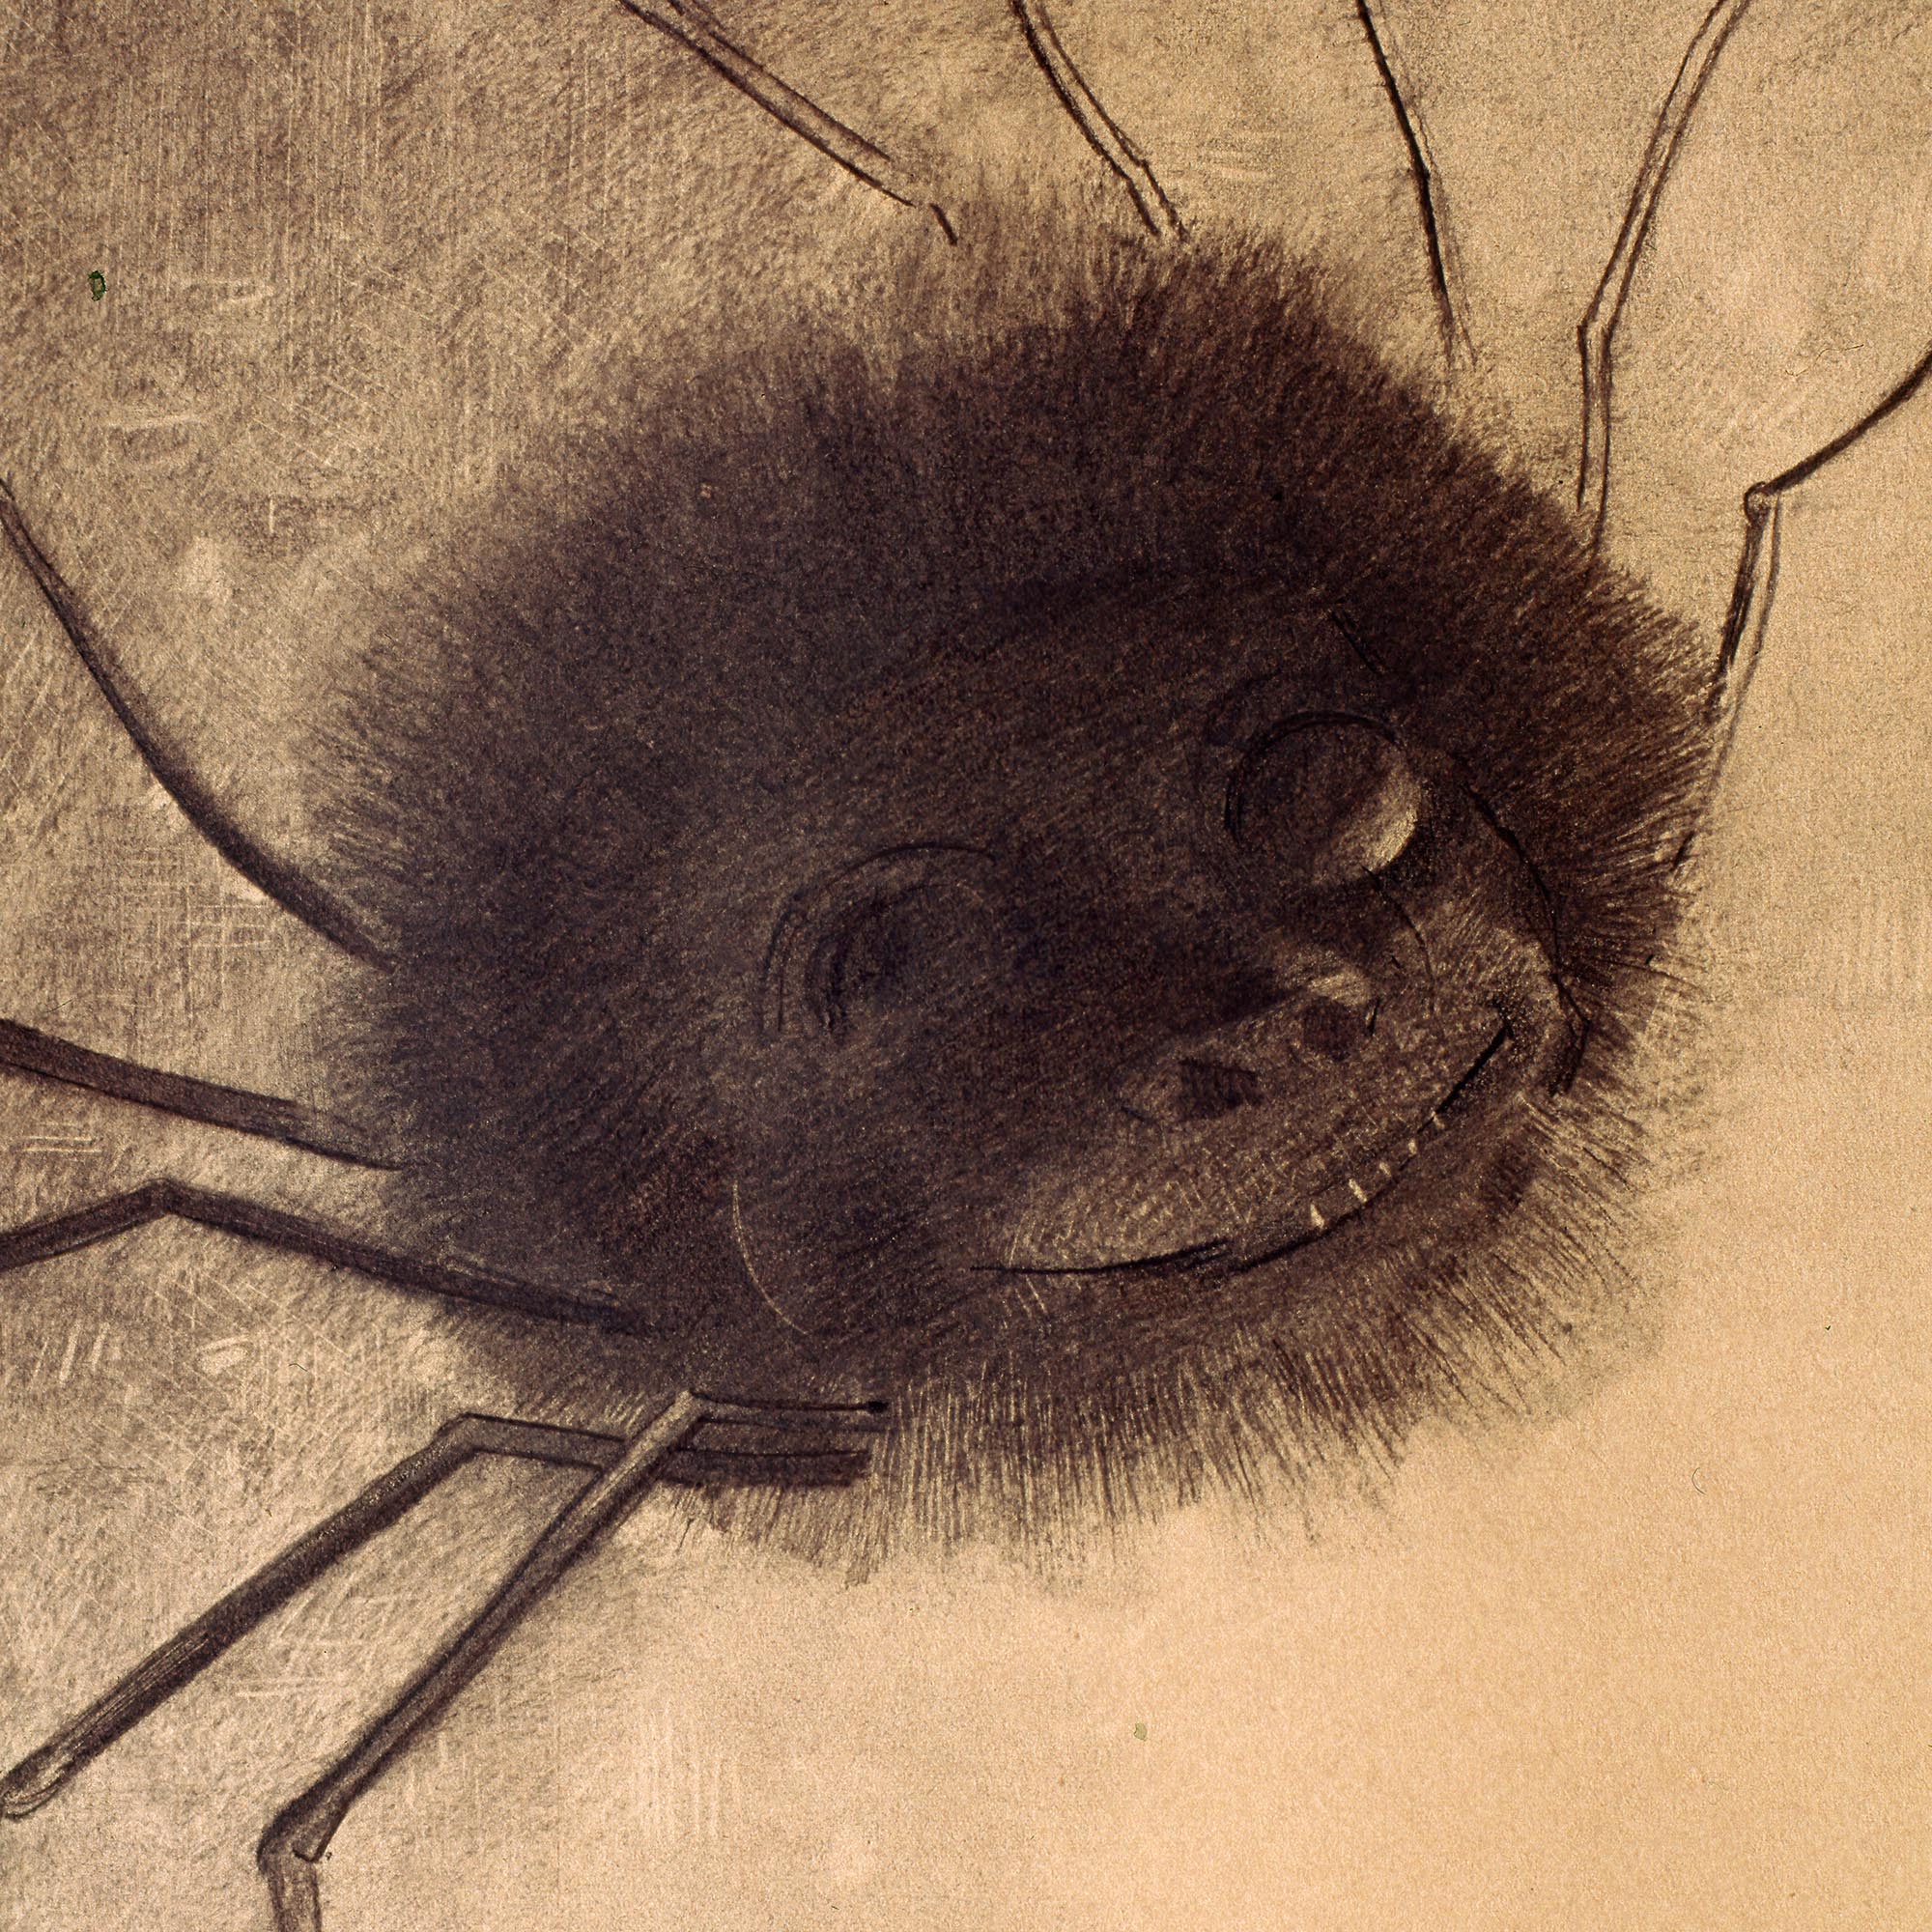 Fine art Odilon Redon: The Smiling Spider Symbolist | Dark Art Fantasy Surreal Vintage Fine Art Print